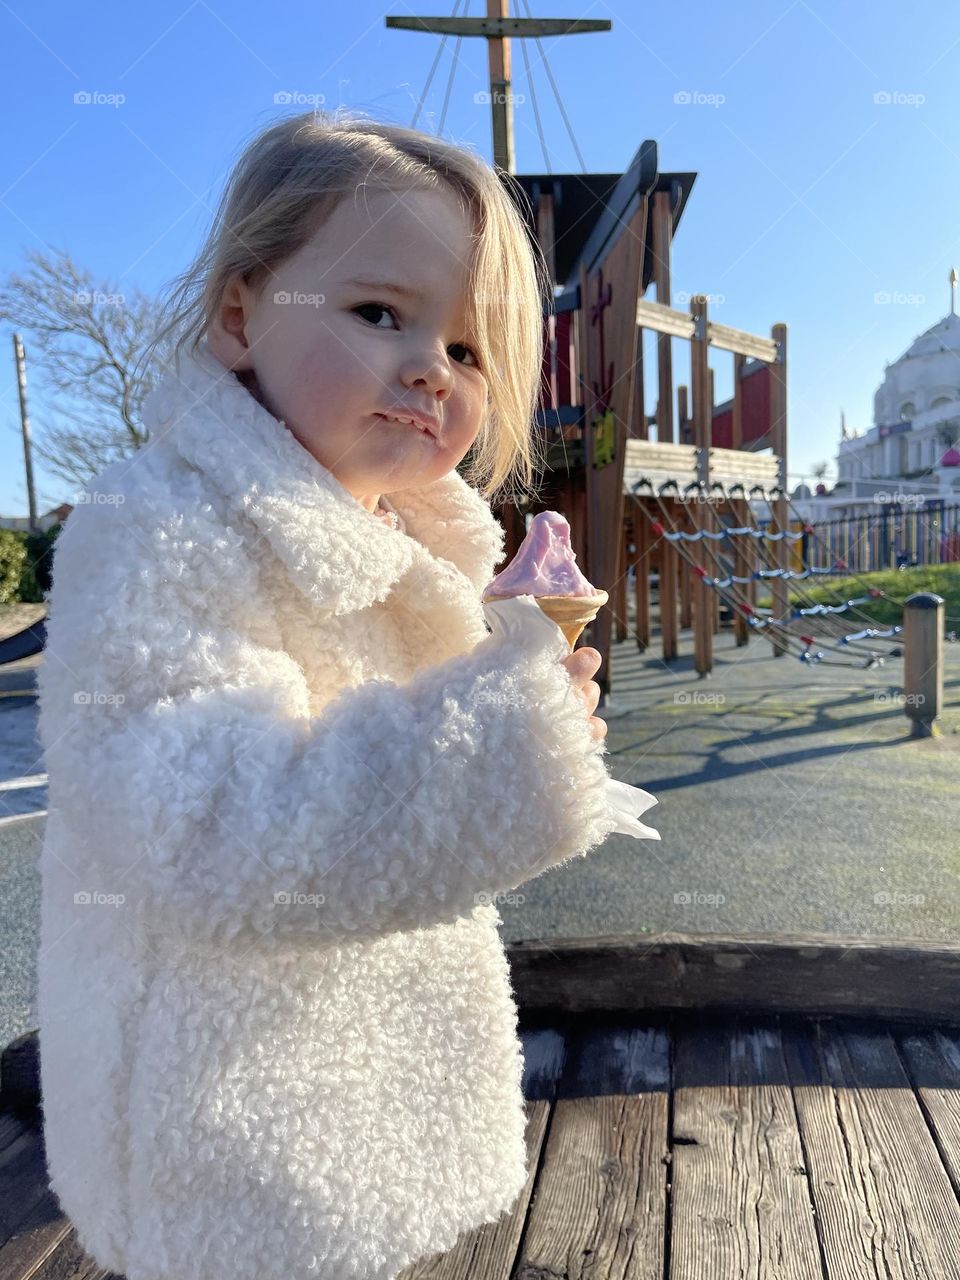 Little girl eating ice cream on playground 